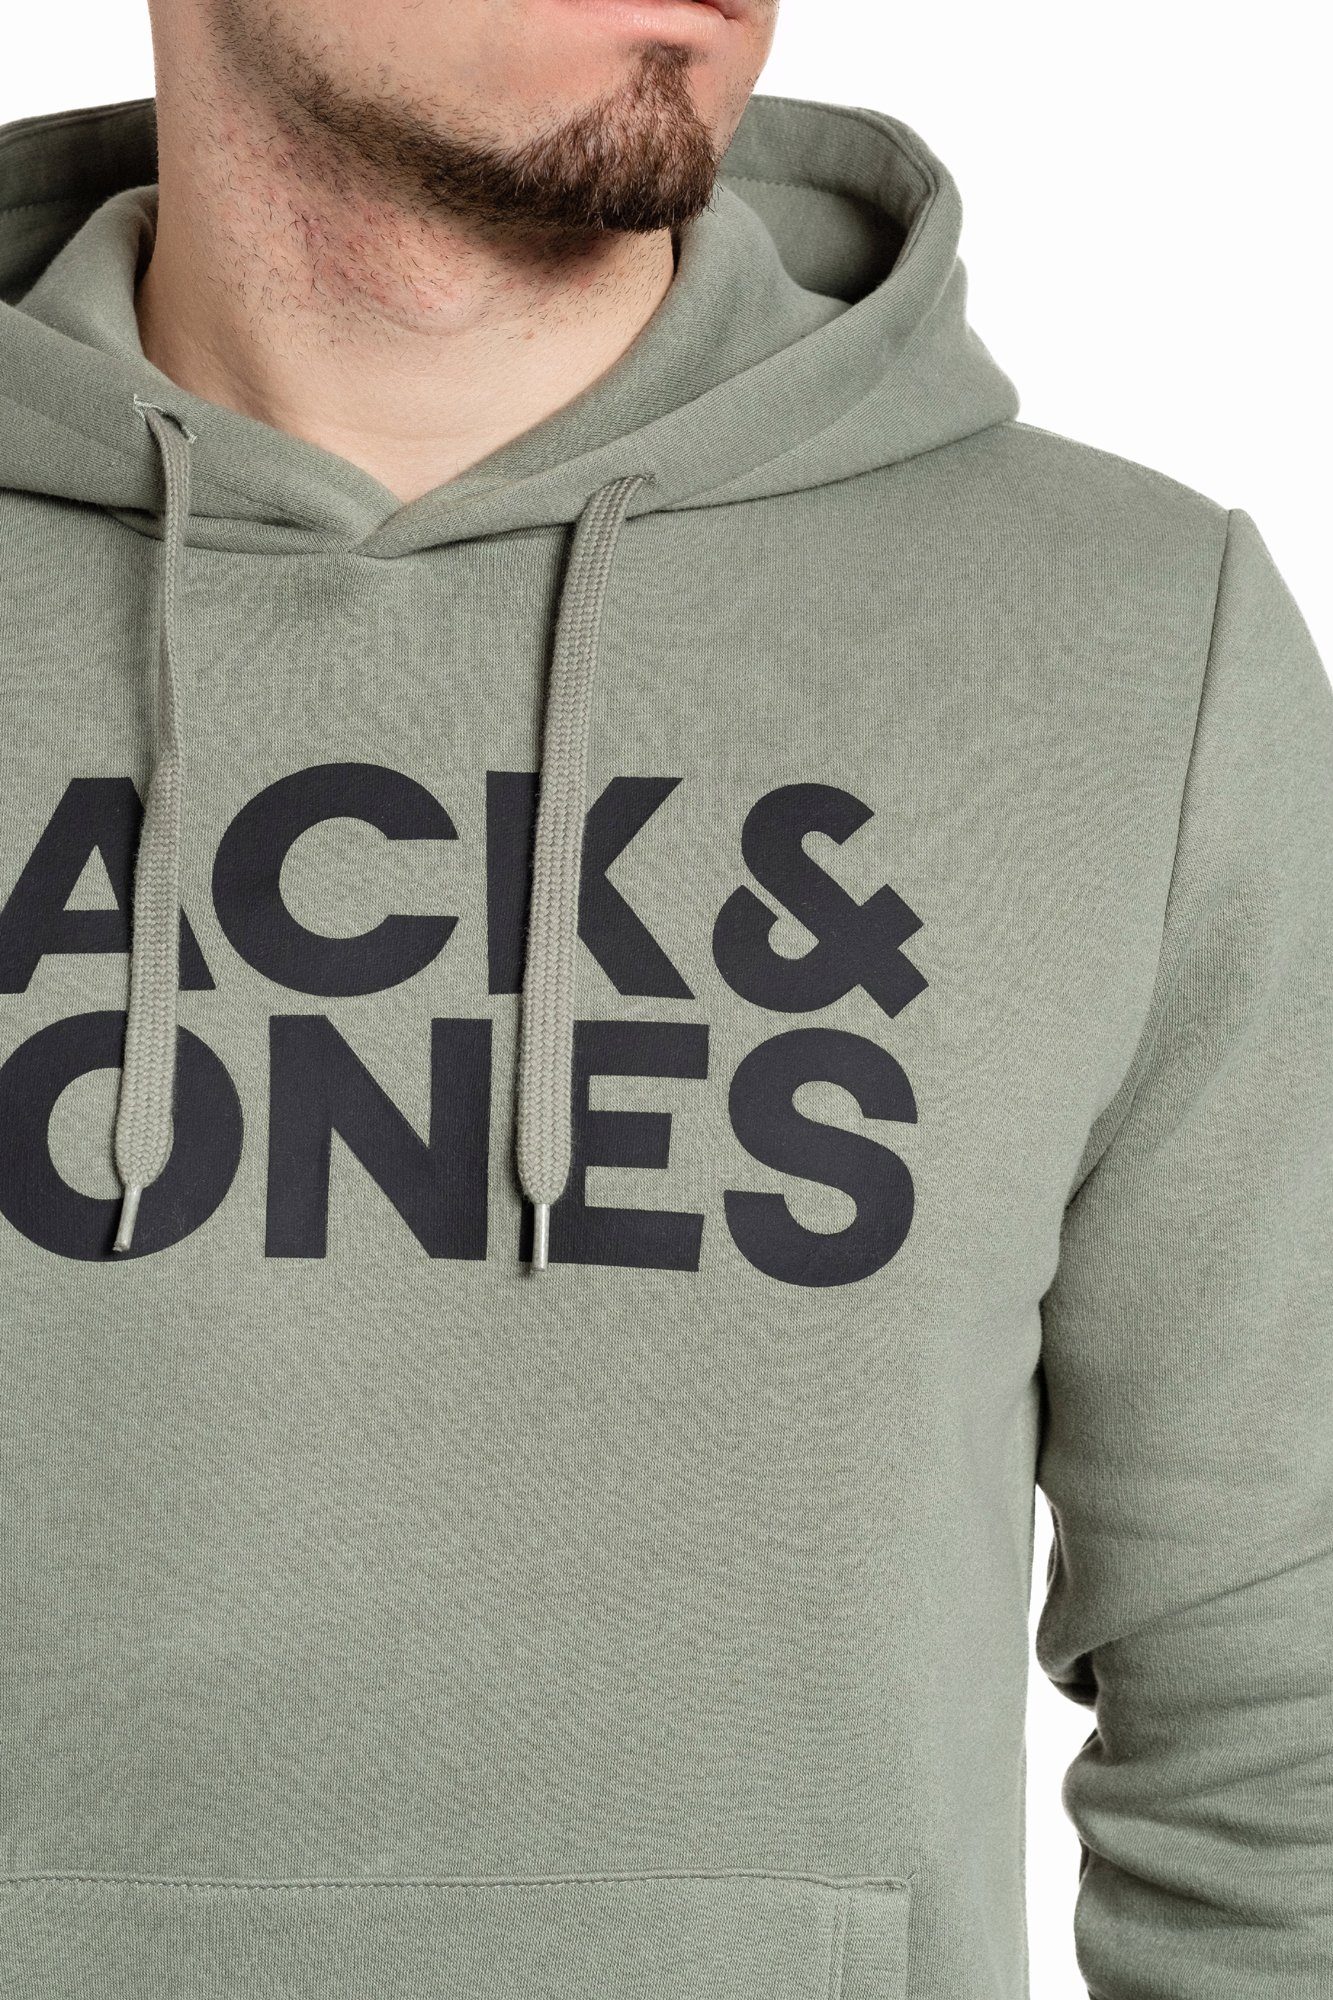 Jack & Jones Seaspray-Black mit Kapuzensweatshirt Kängurutasche